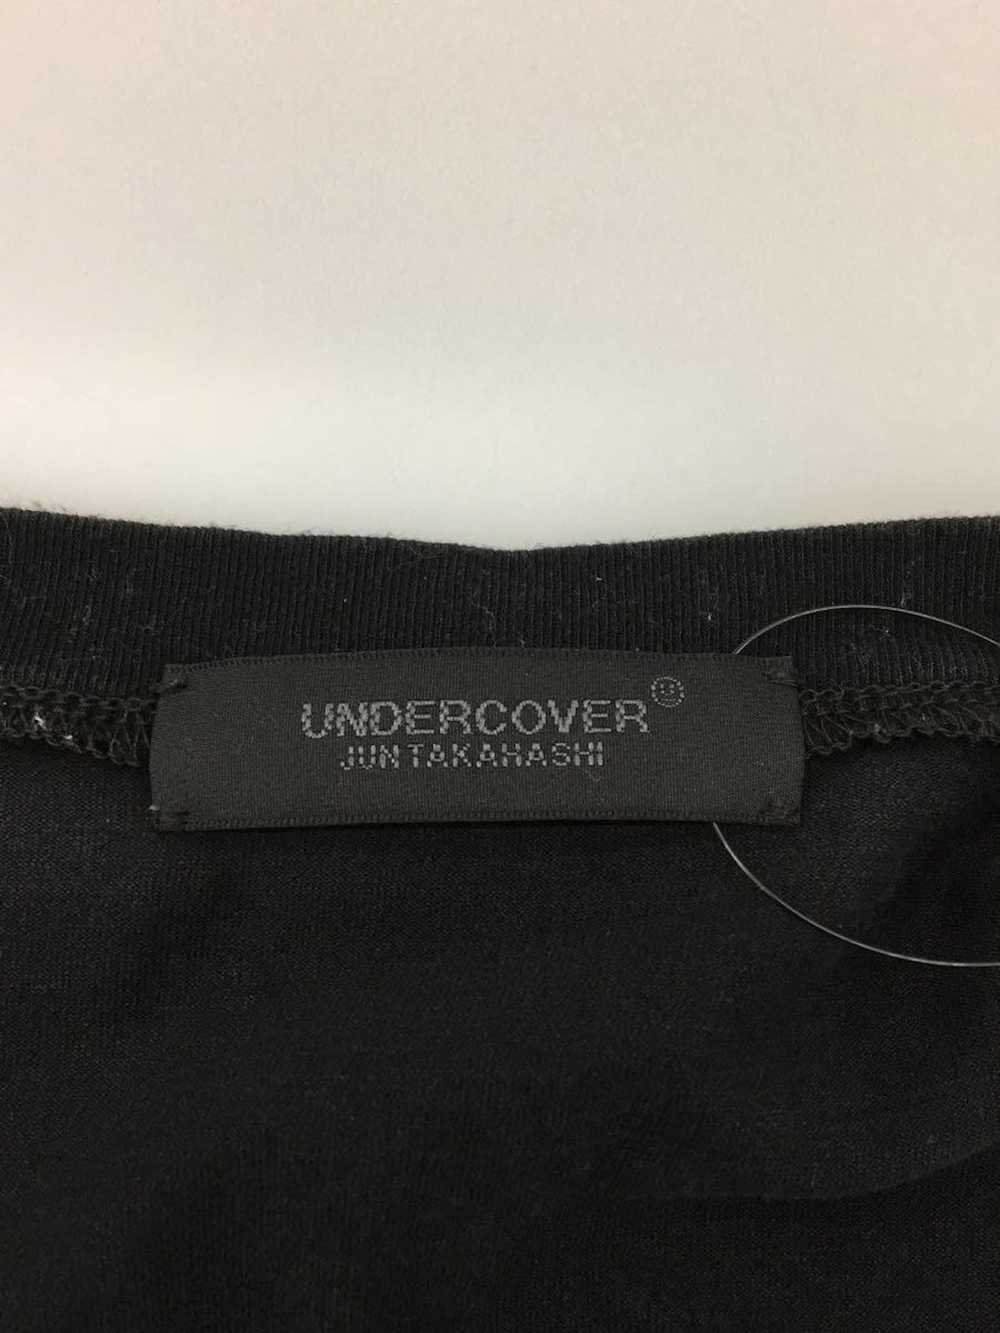 Undercover 🐎 SS20 V-Neck T-Shirt - image 3